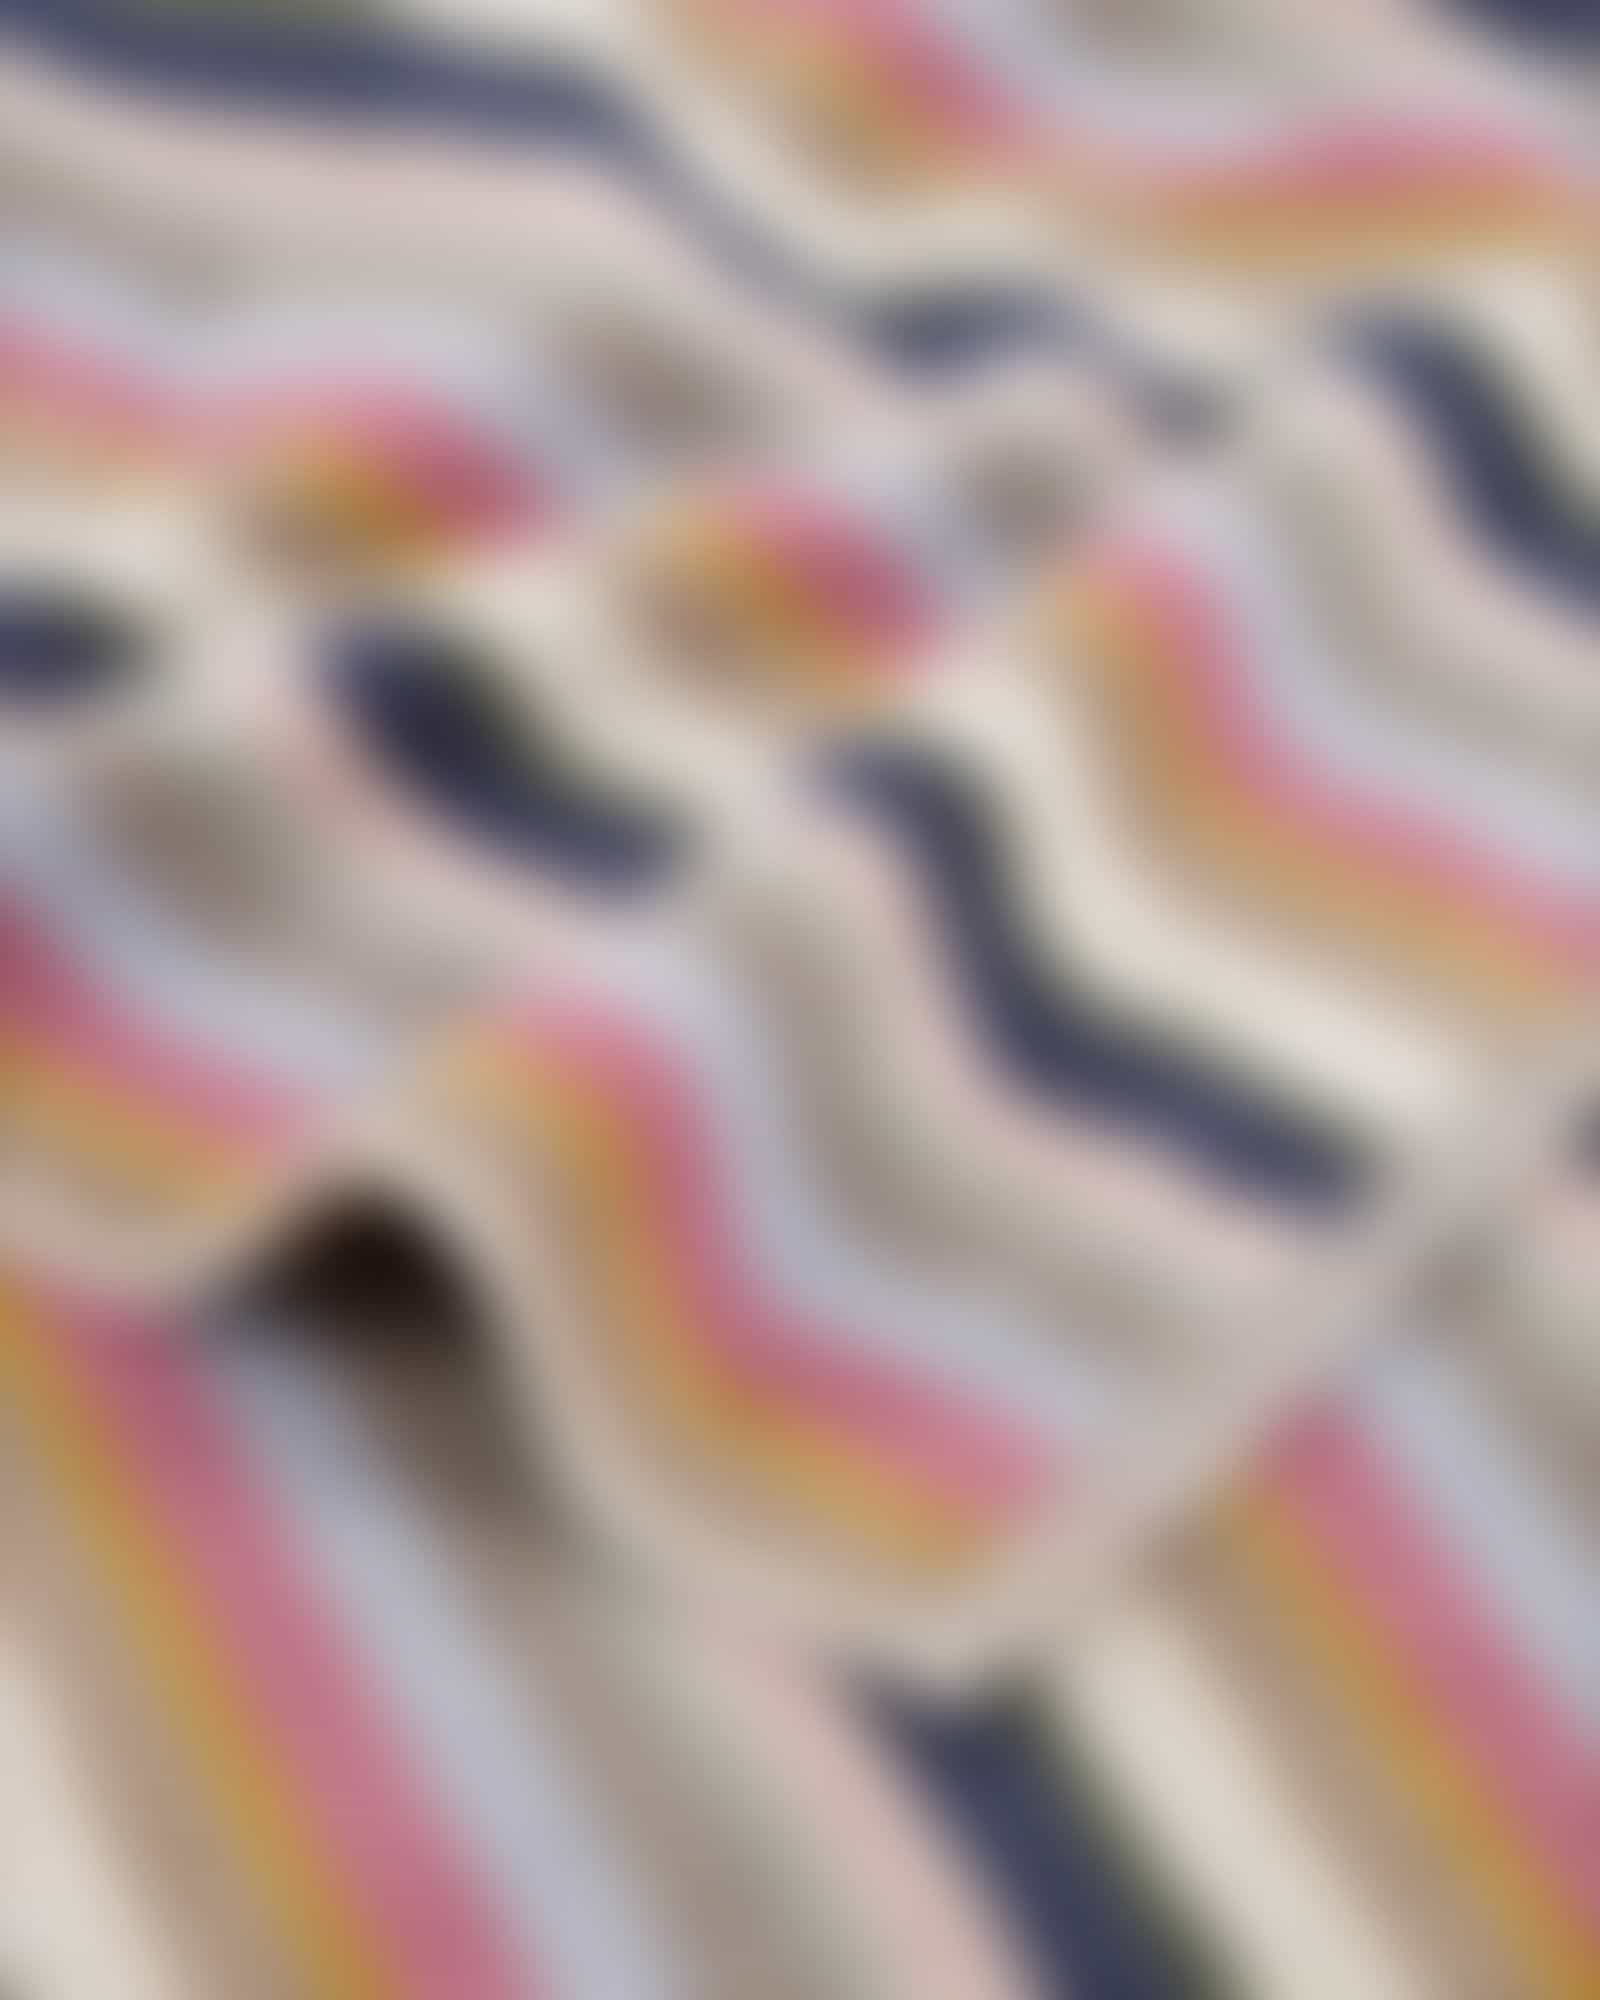 Villeroy &amp; Boch Handtücher Coordinates Stripes 2551 - Farbe: multicolor - 12 - Duschtuch 80x150 cm